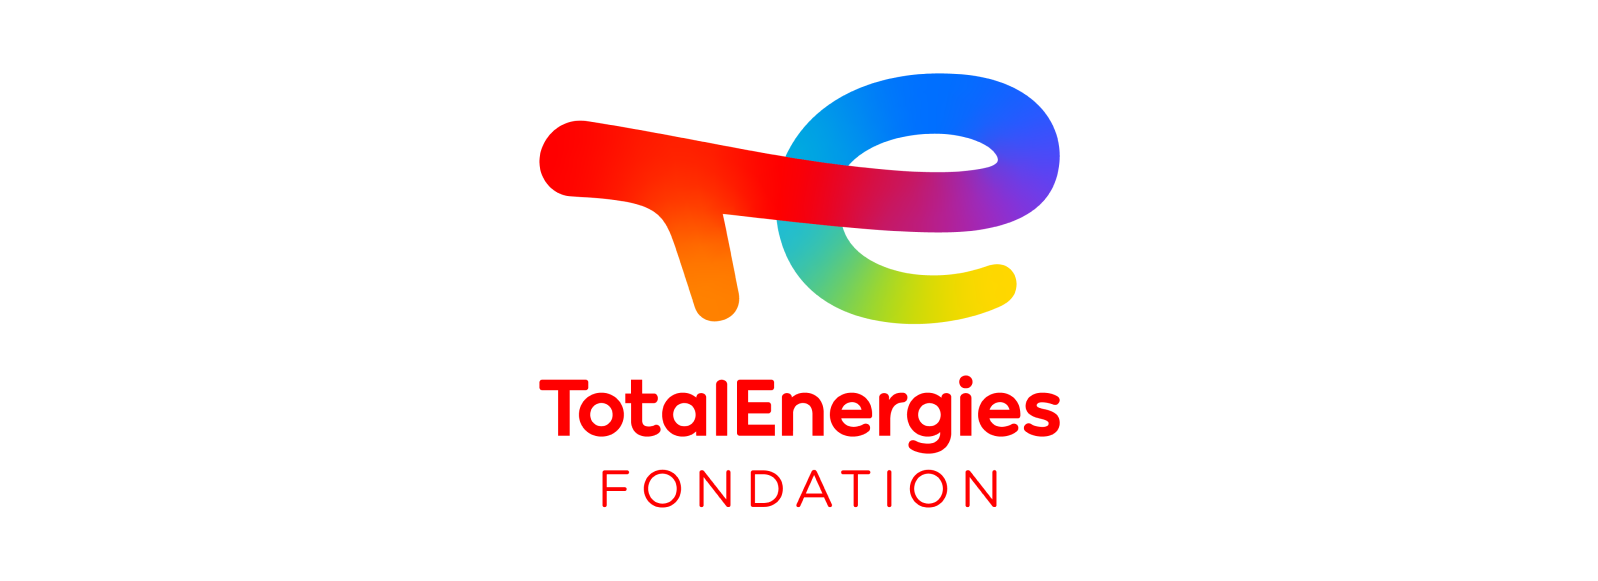 TotalEnergies Fondation